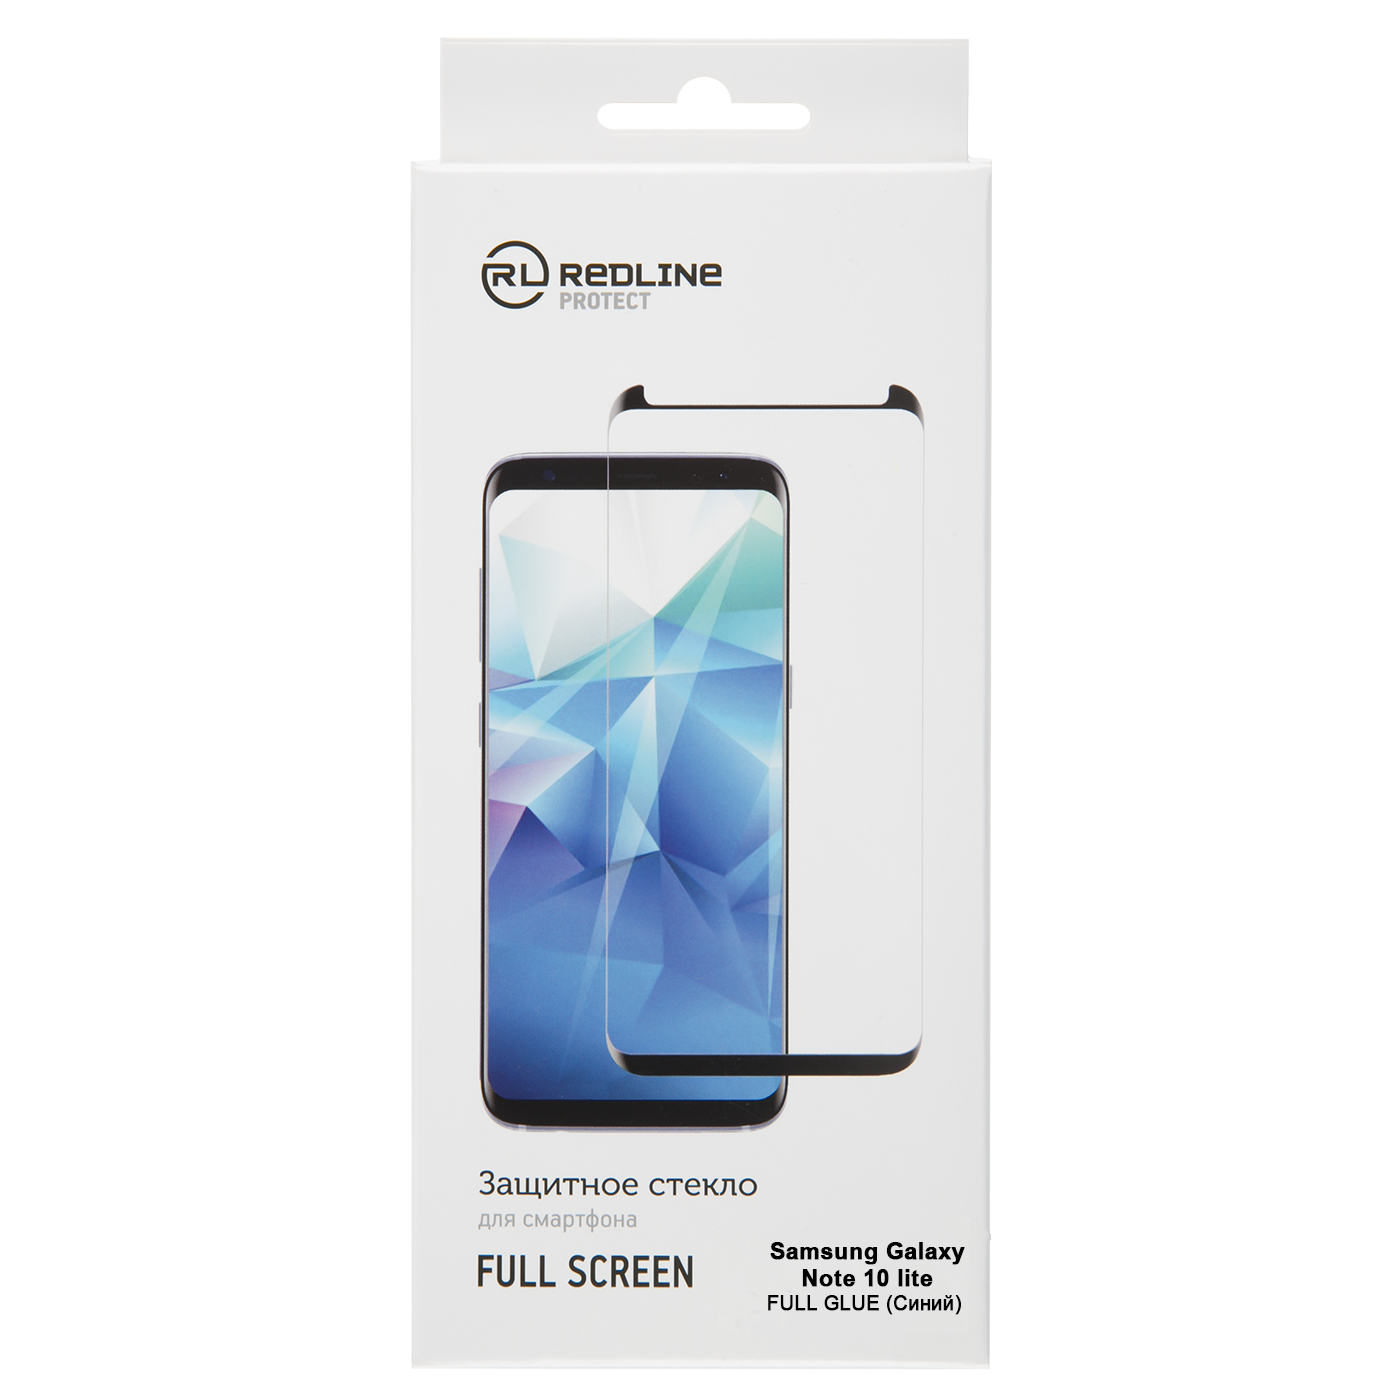 Защитный экран Samsung Galaxy Note 10 lite Full screen tempered glass FULL GLUE